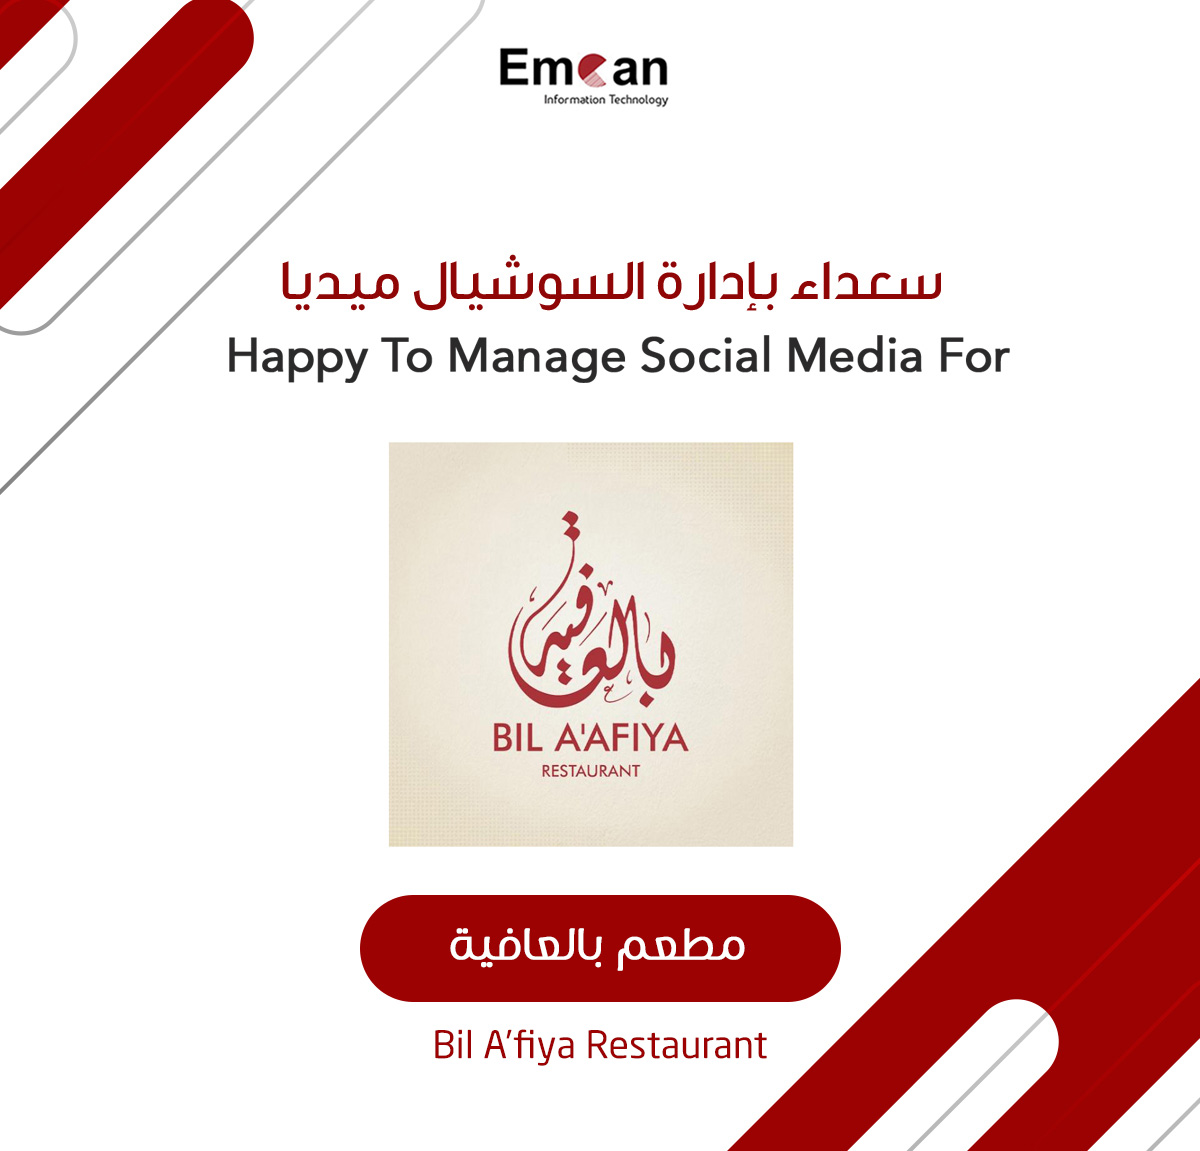 Bel Afya Restaurant